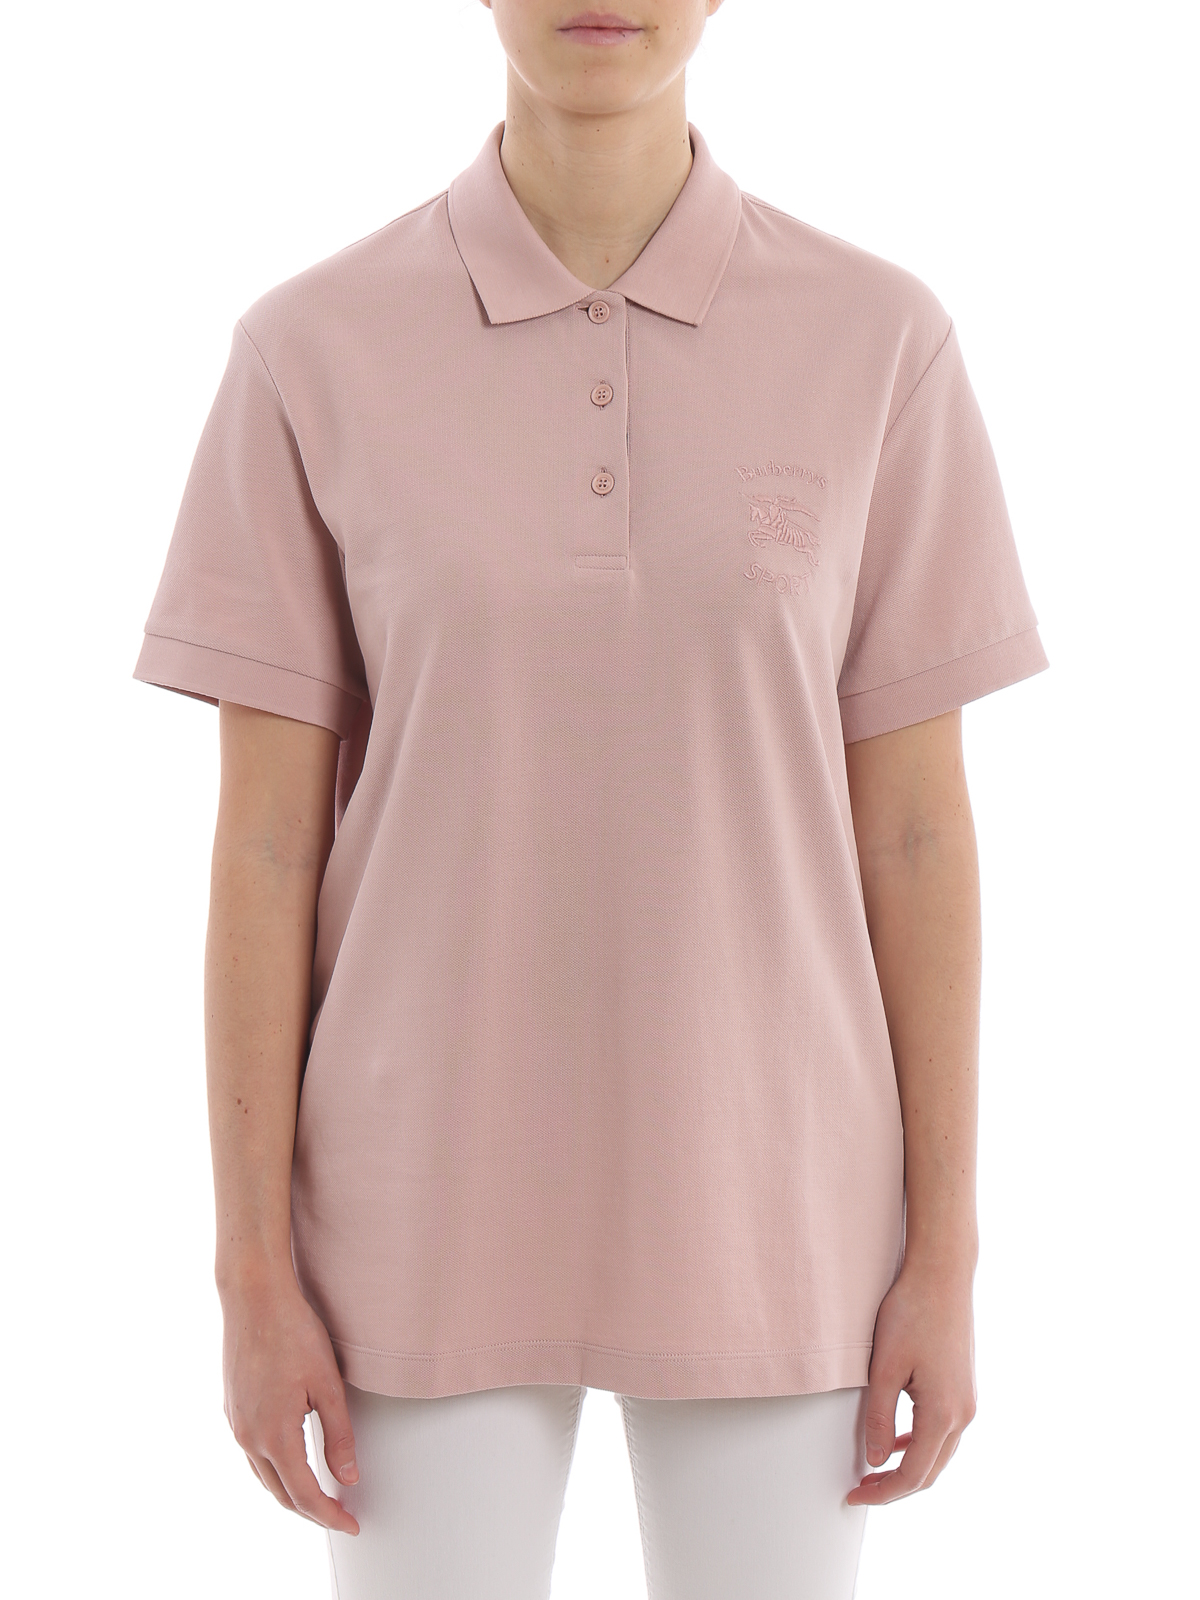 Polo shirts Burberry - Hartford pink polo shirt - 8002925 